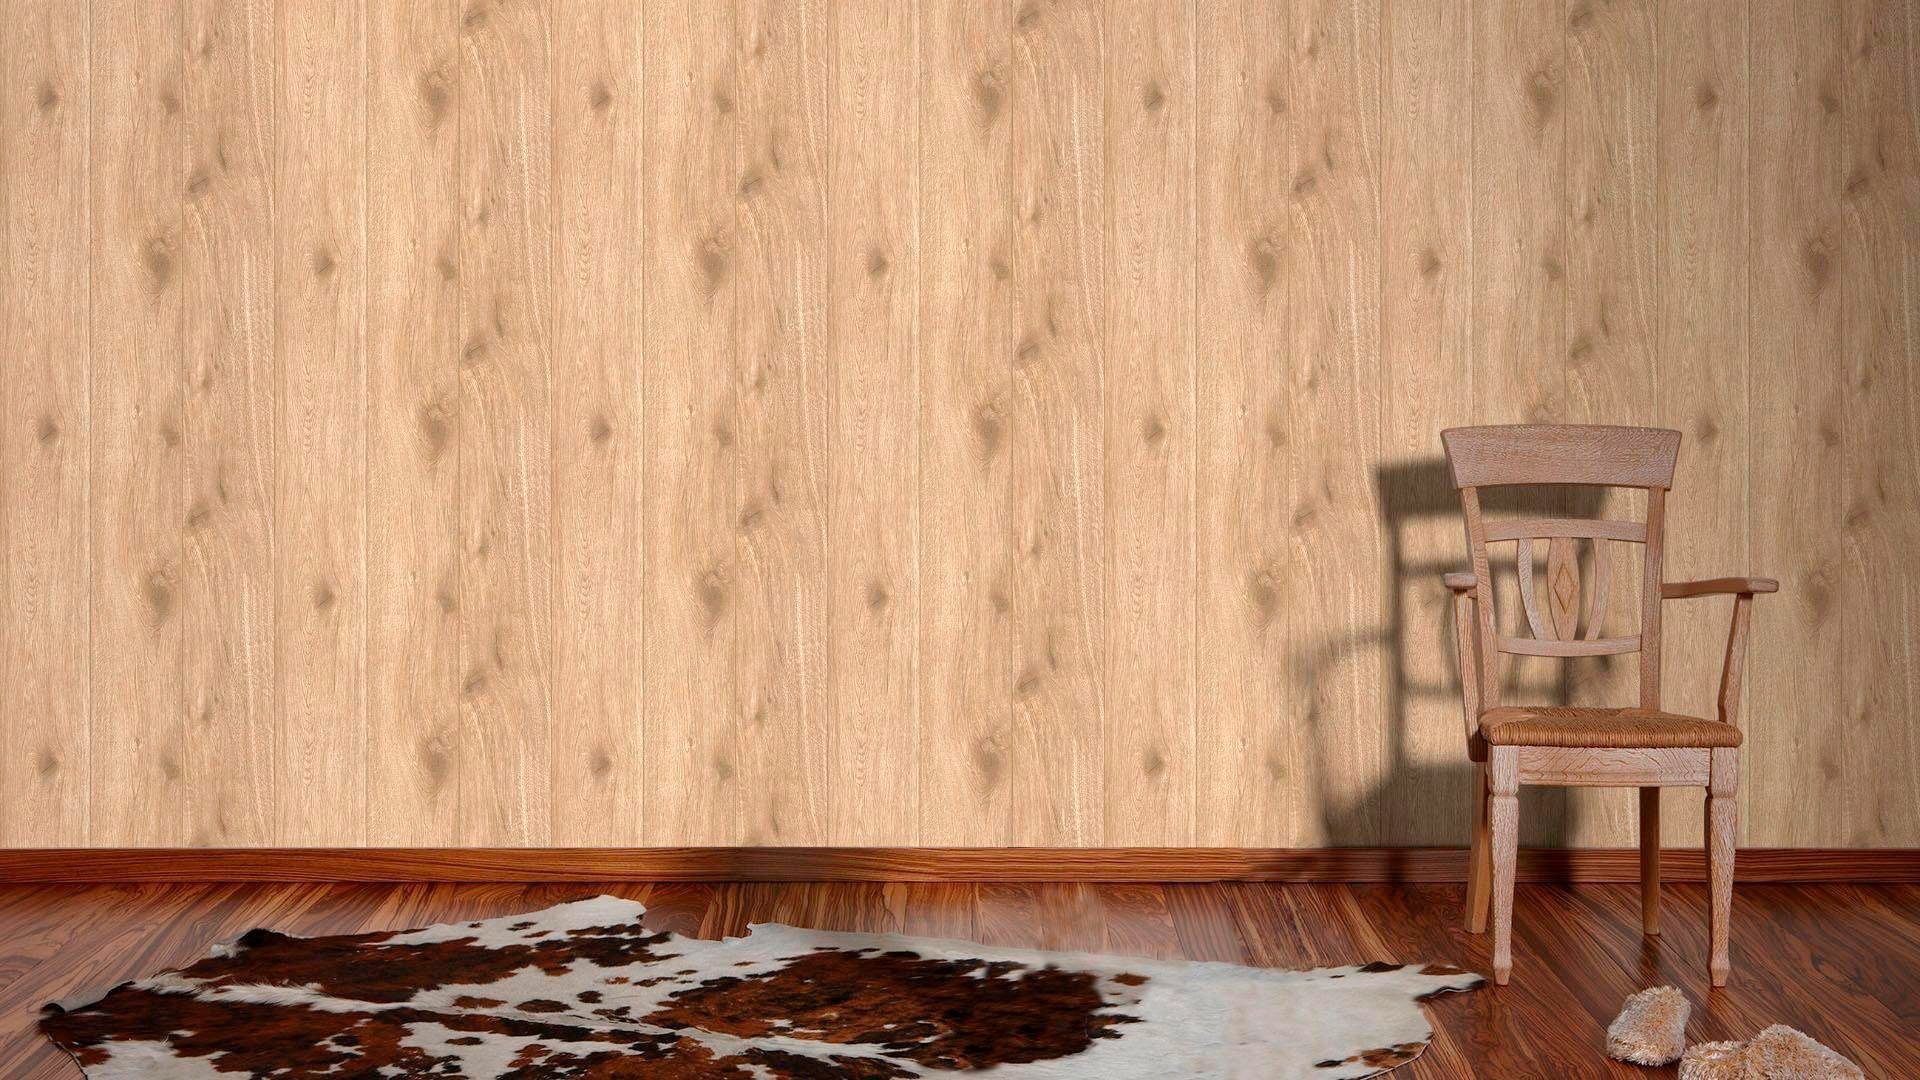 realistisch, Création living beige/braun Stone, St), glatt, Wood`n Holzoptik Holz, gestreift, of A.S. Best walls (1 Tapete Vliestapete